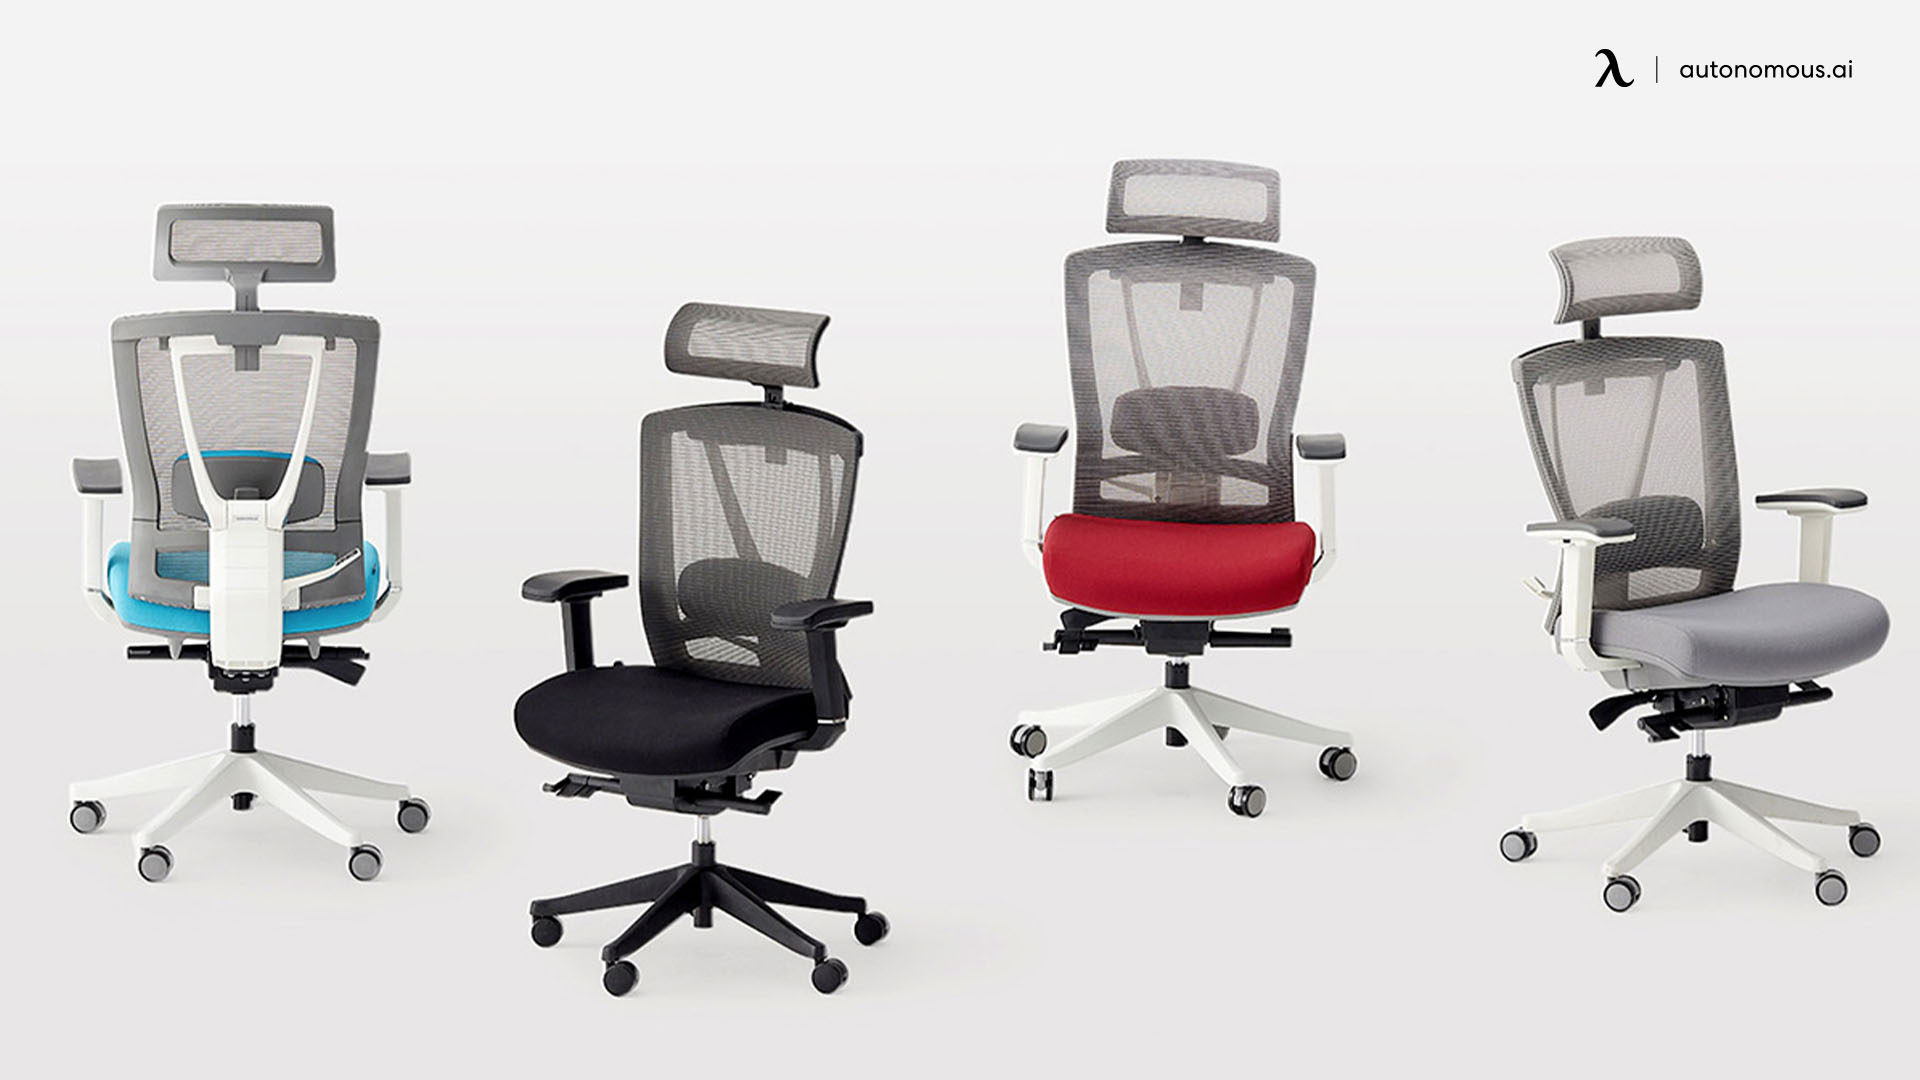 ErgoChair Pro by Autonomous small office furniture